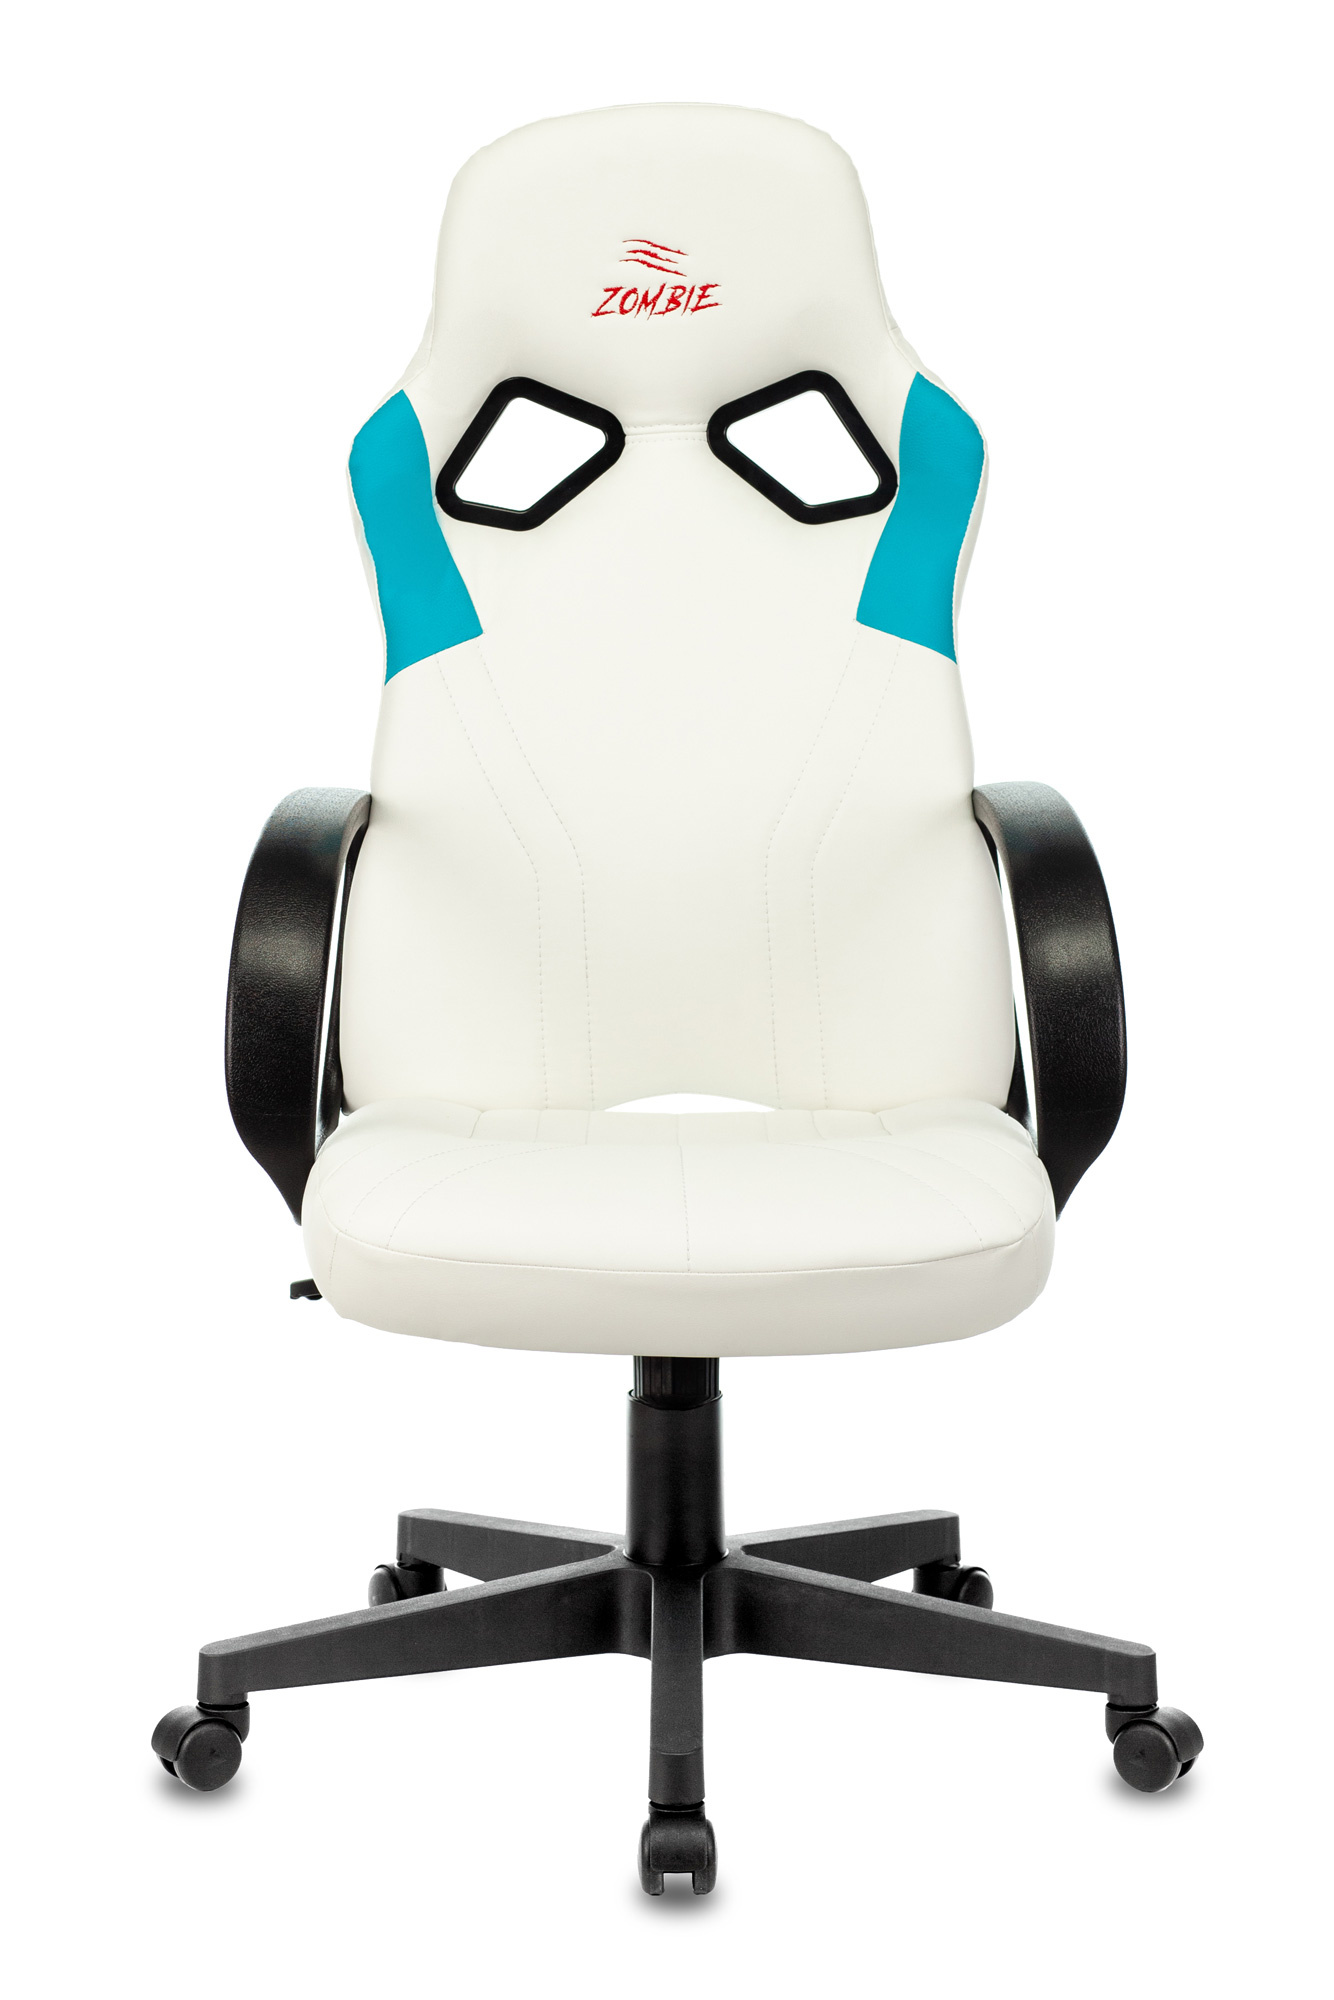 Кресло игровое Zombie RUNNER, обивка: эко.кожа, цвет: белый/голубой (ZOMBIE RUNNER WHITE) от магазина Buro.store